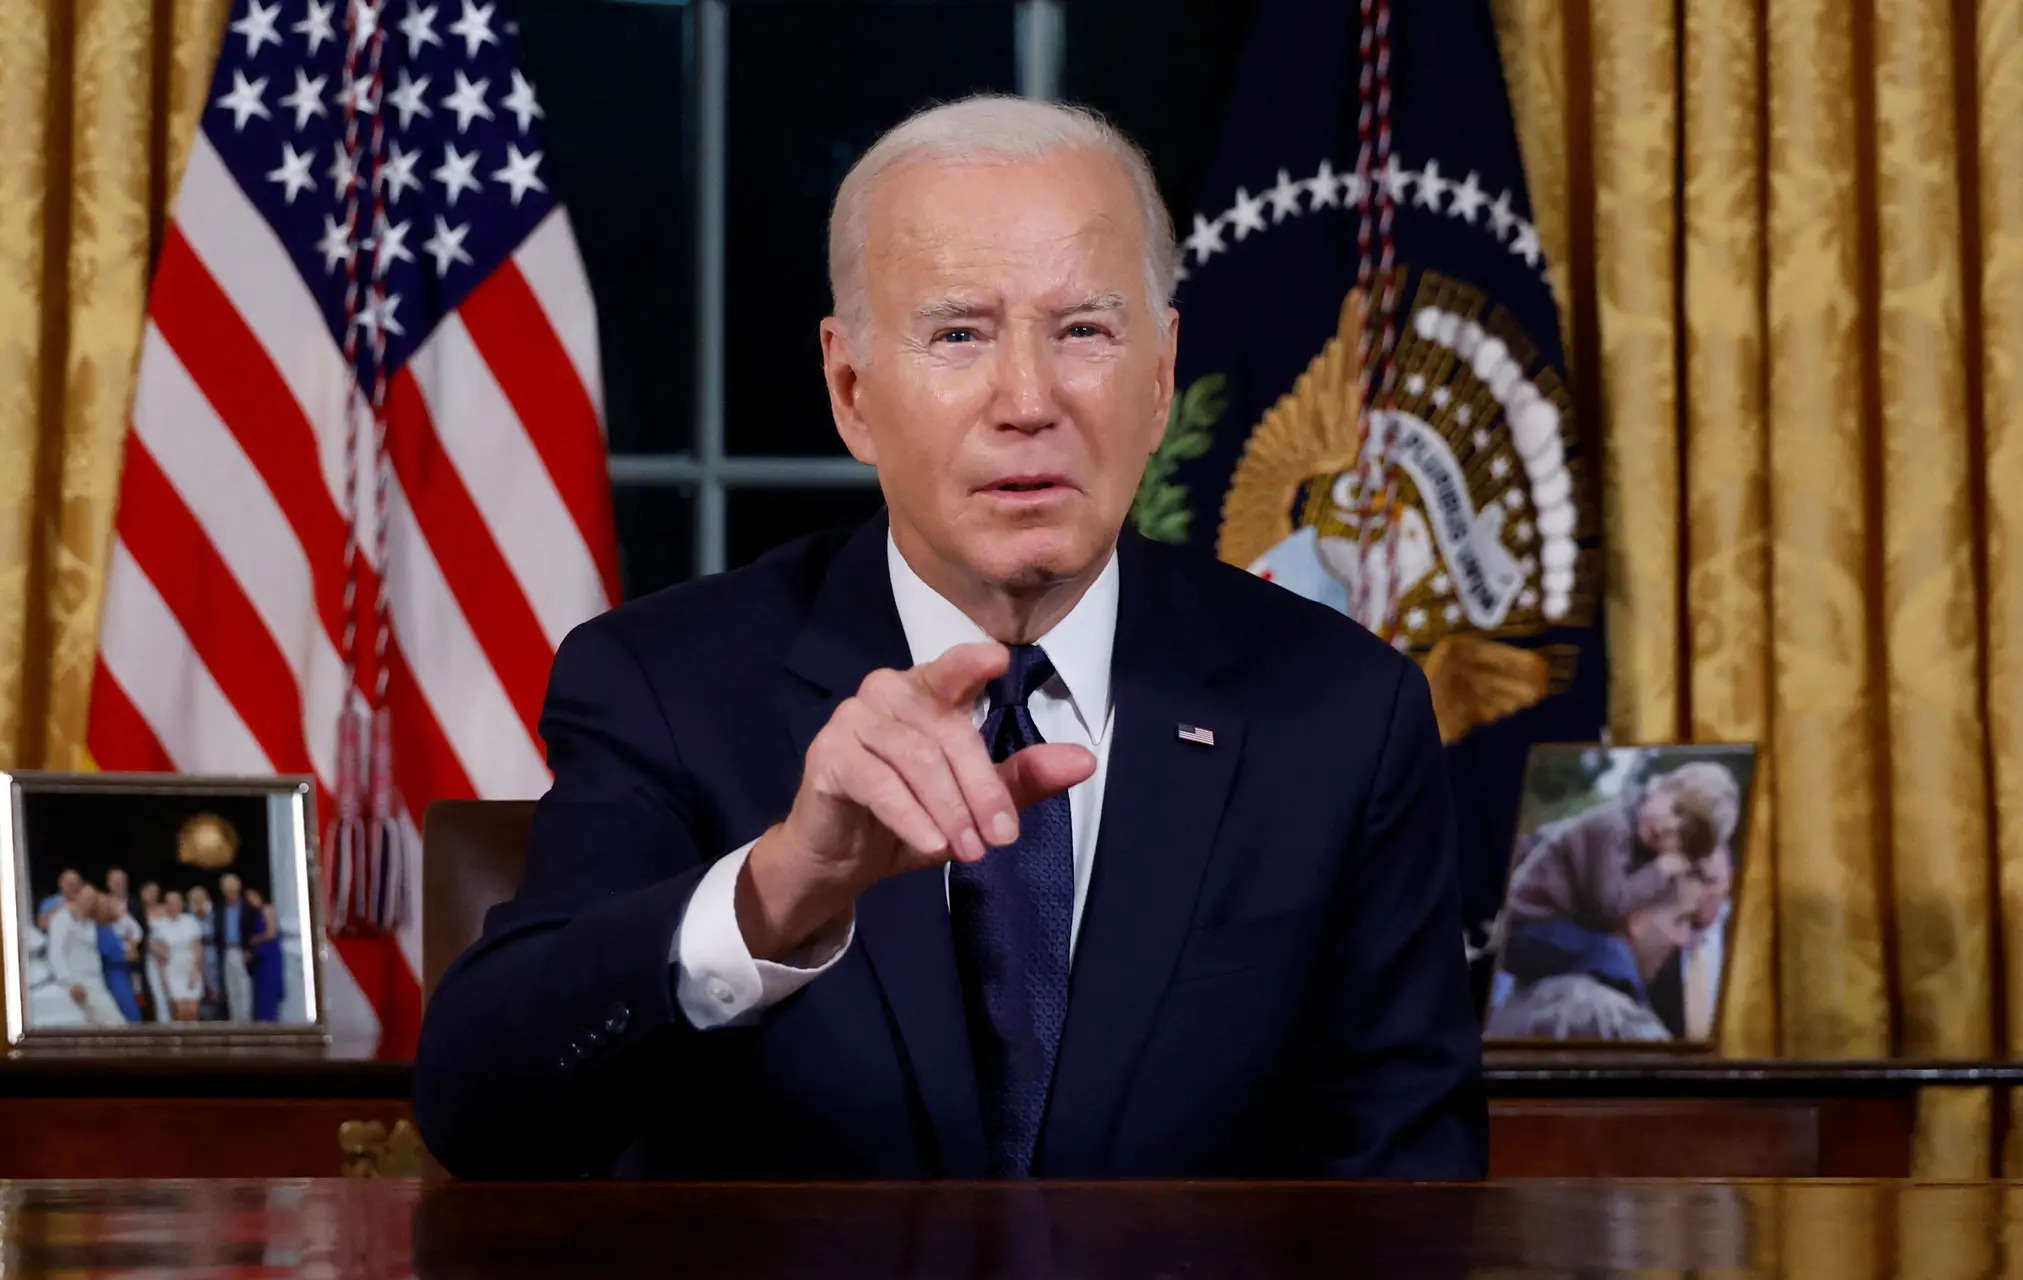 Doctors report: Joe Biden lacked emotion while delivering address to nation, no sign of 